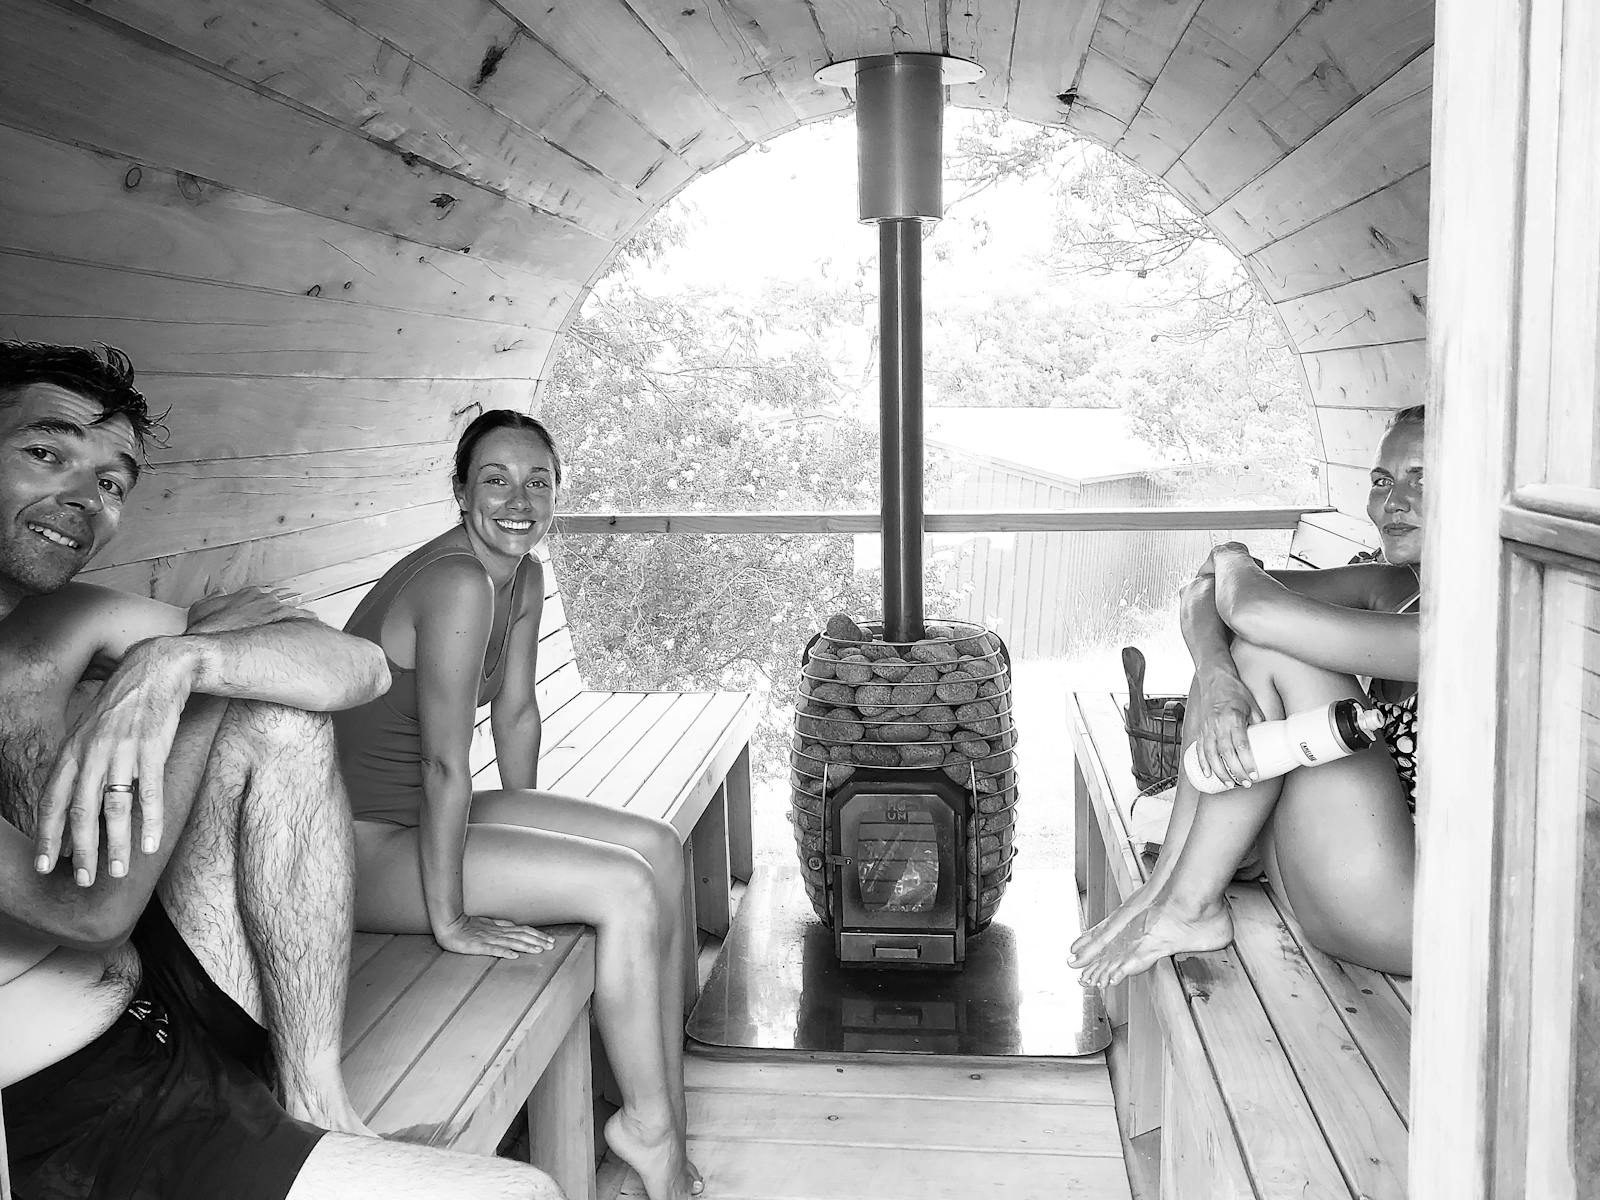 Enjoying the sauna